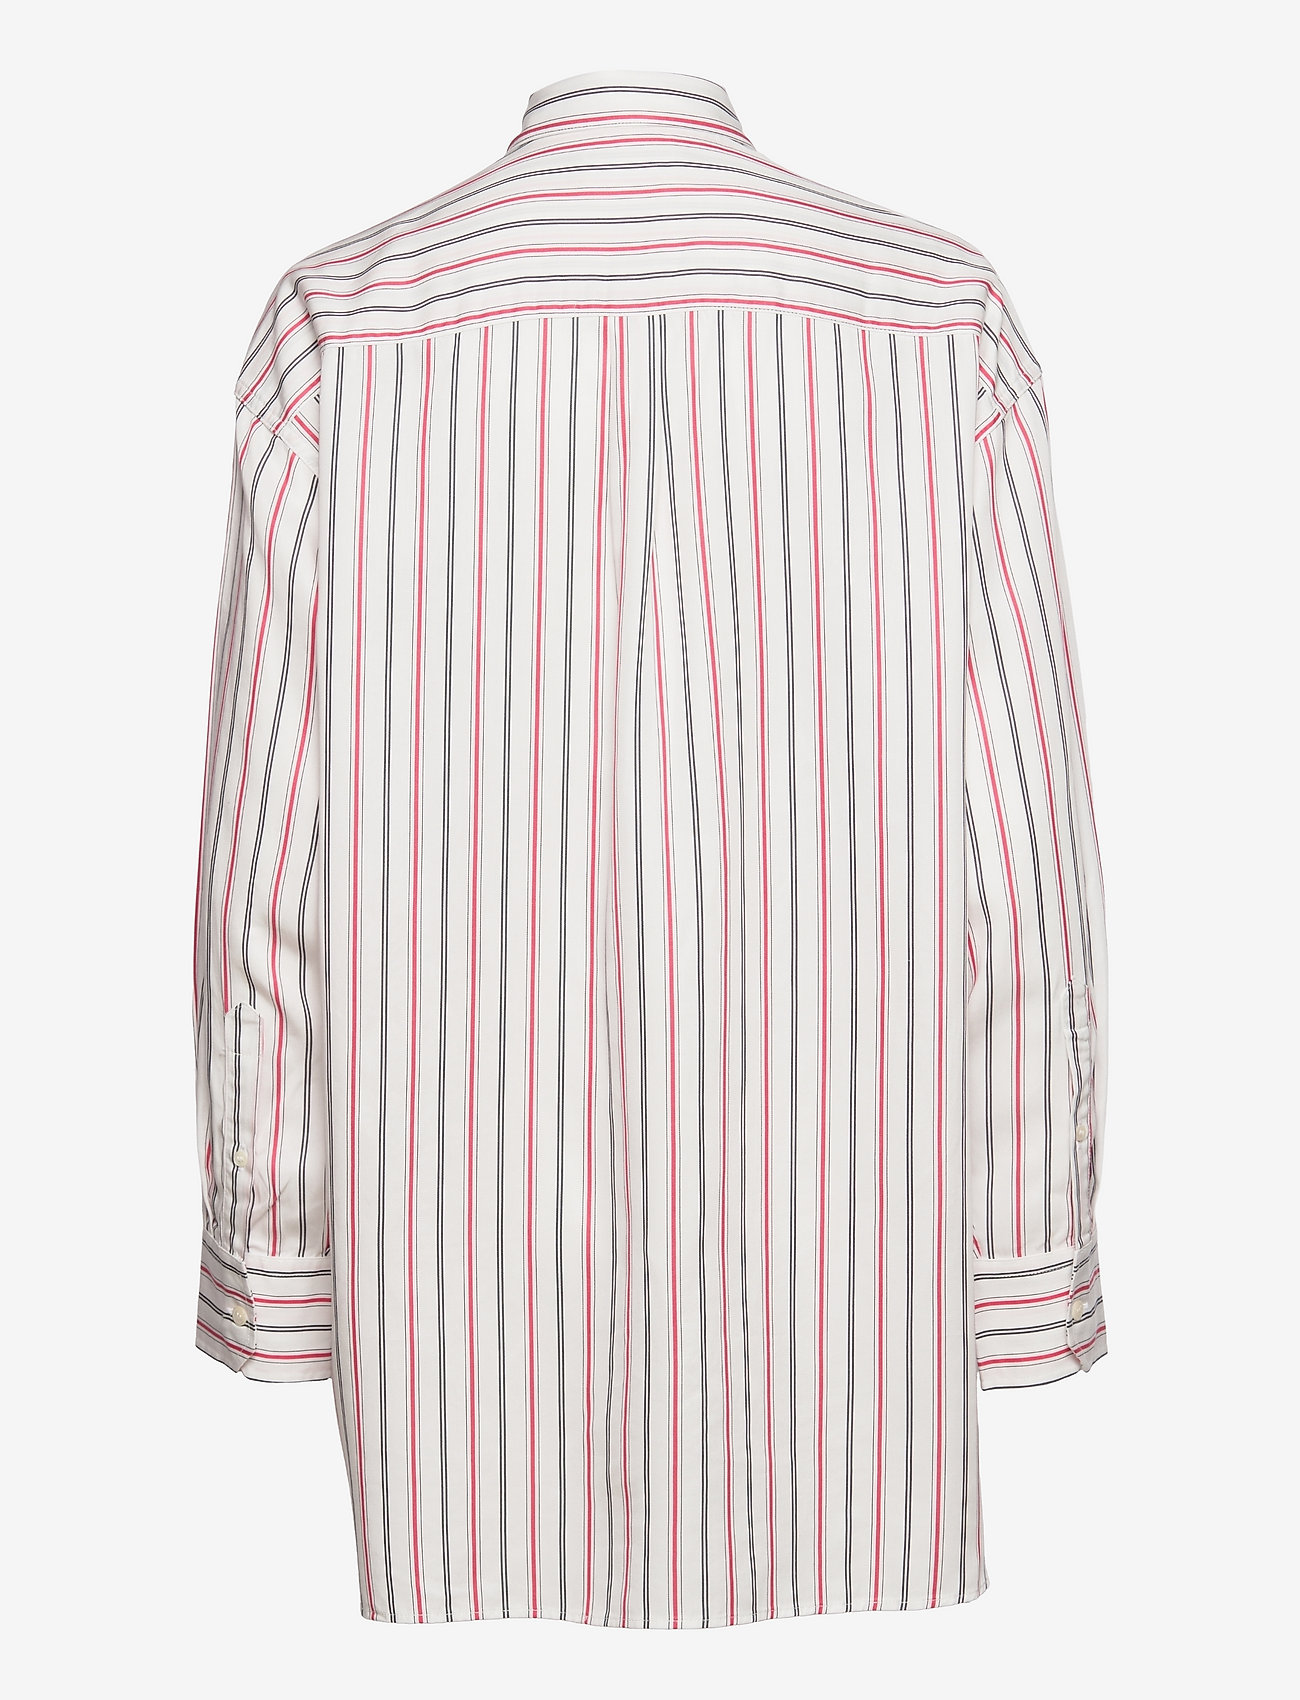 Soulland - Estelle shirt - long-sleeved shirts - white/red stripes - 1